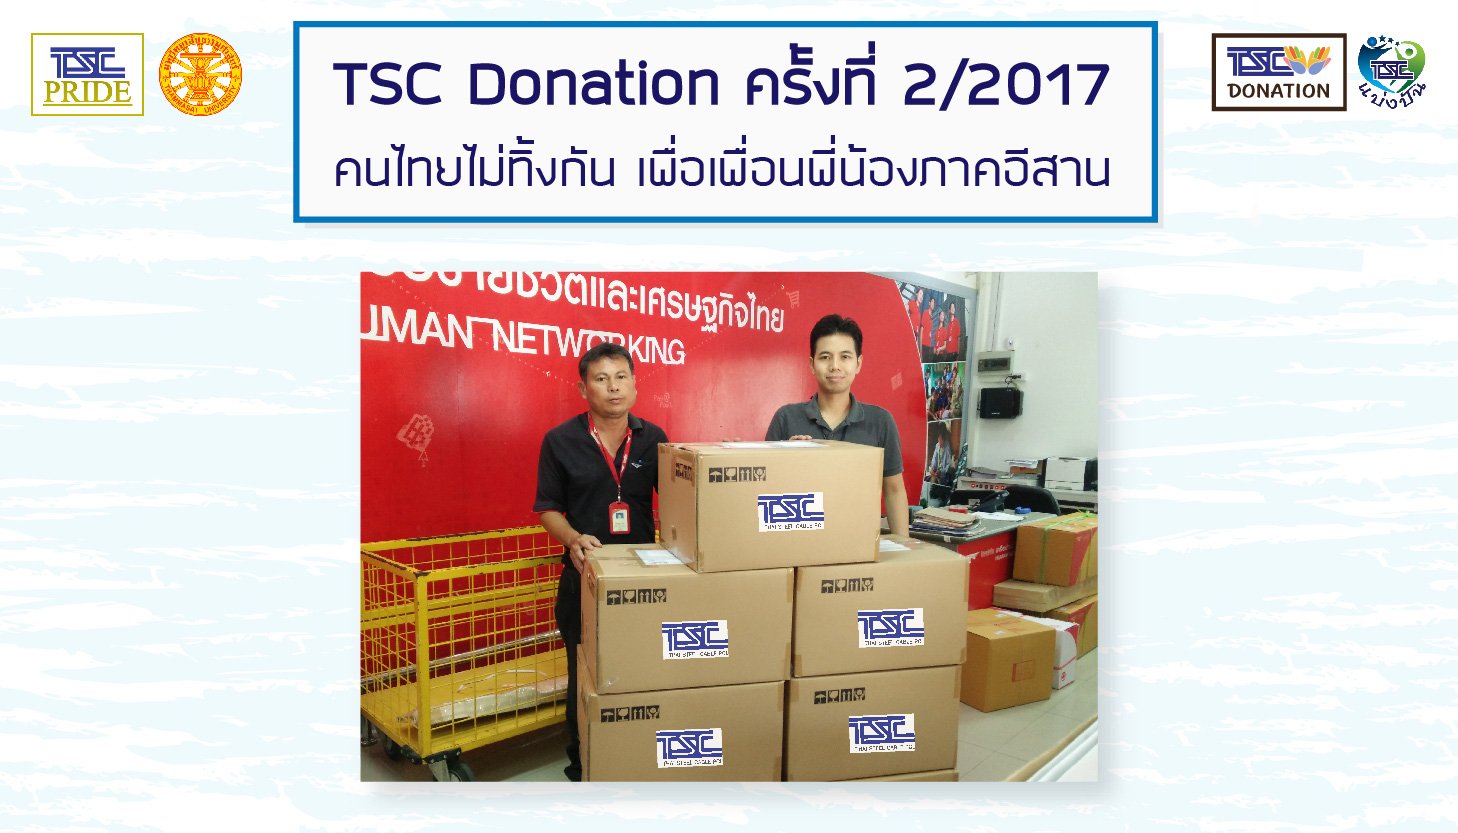 TSC Donation 02/2017 